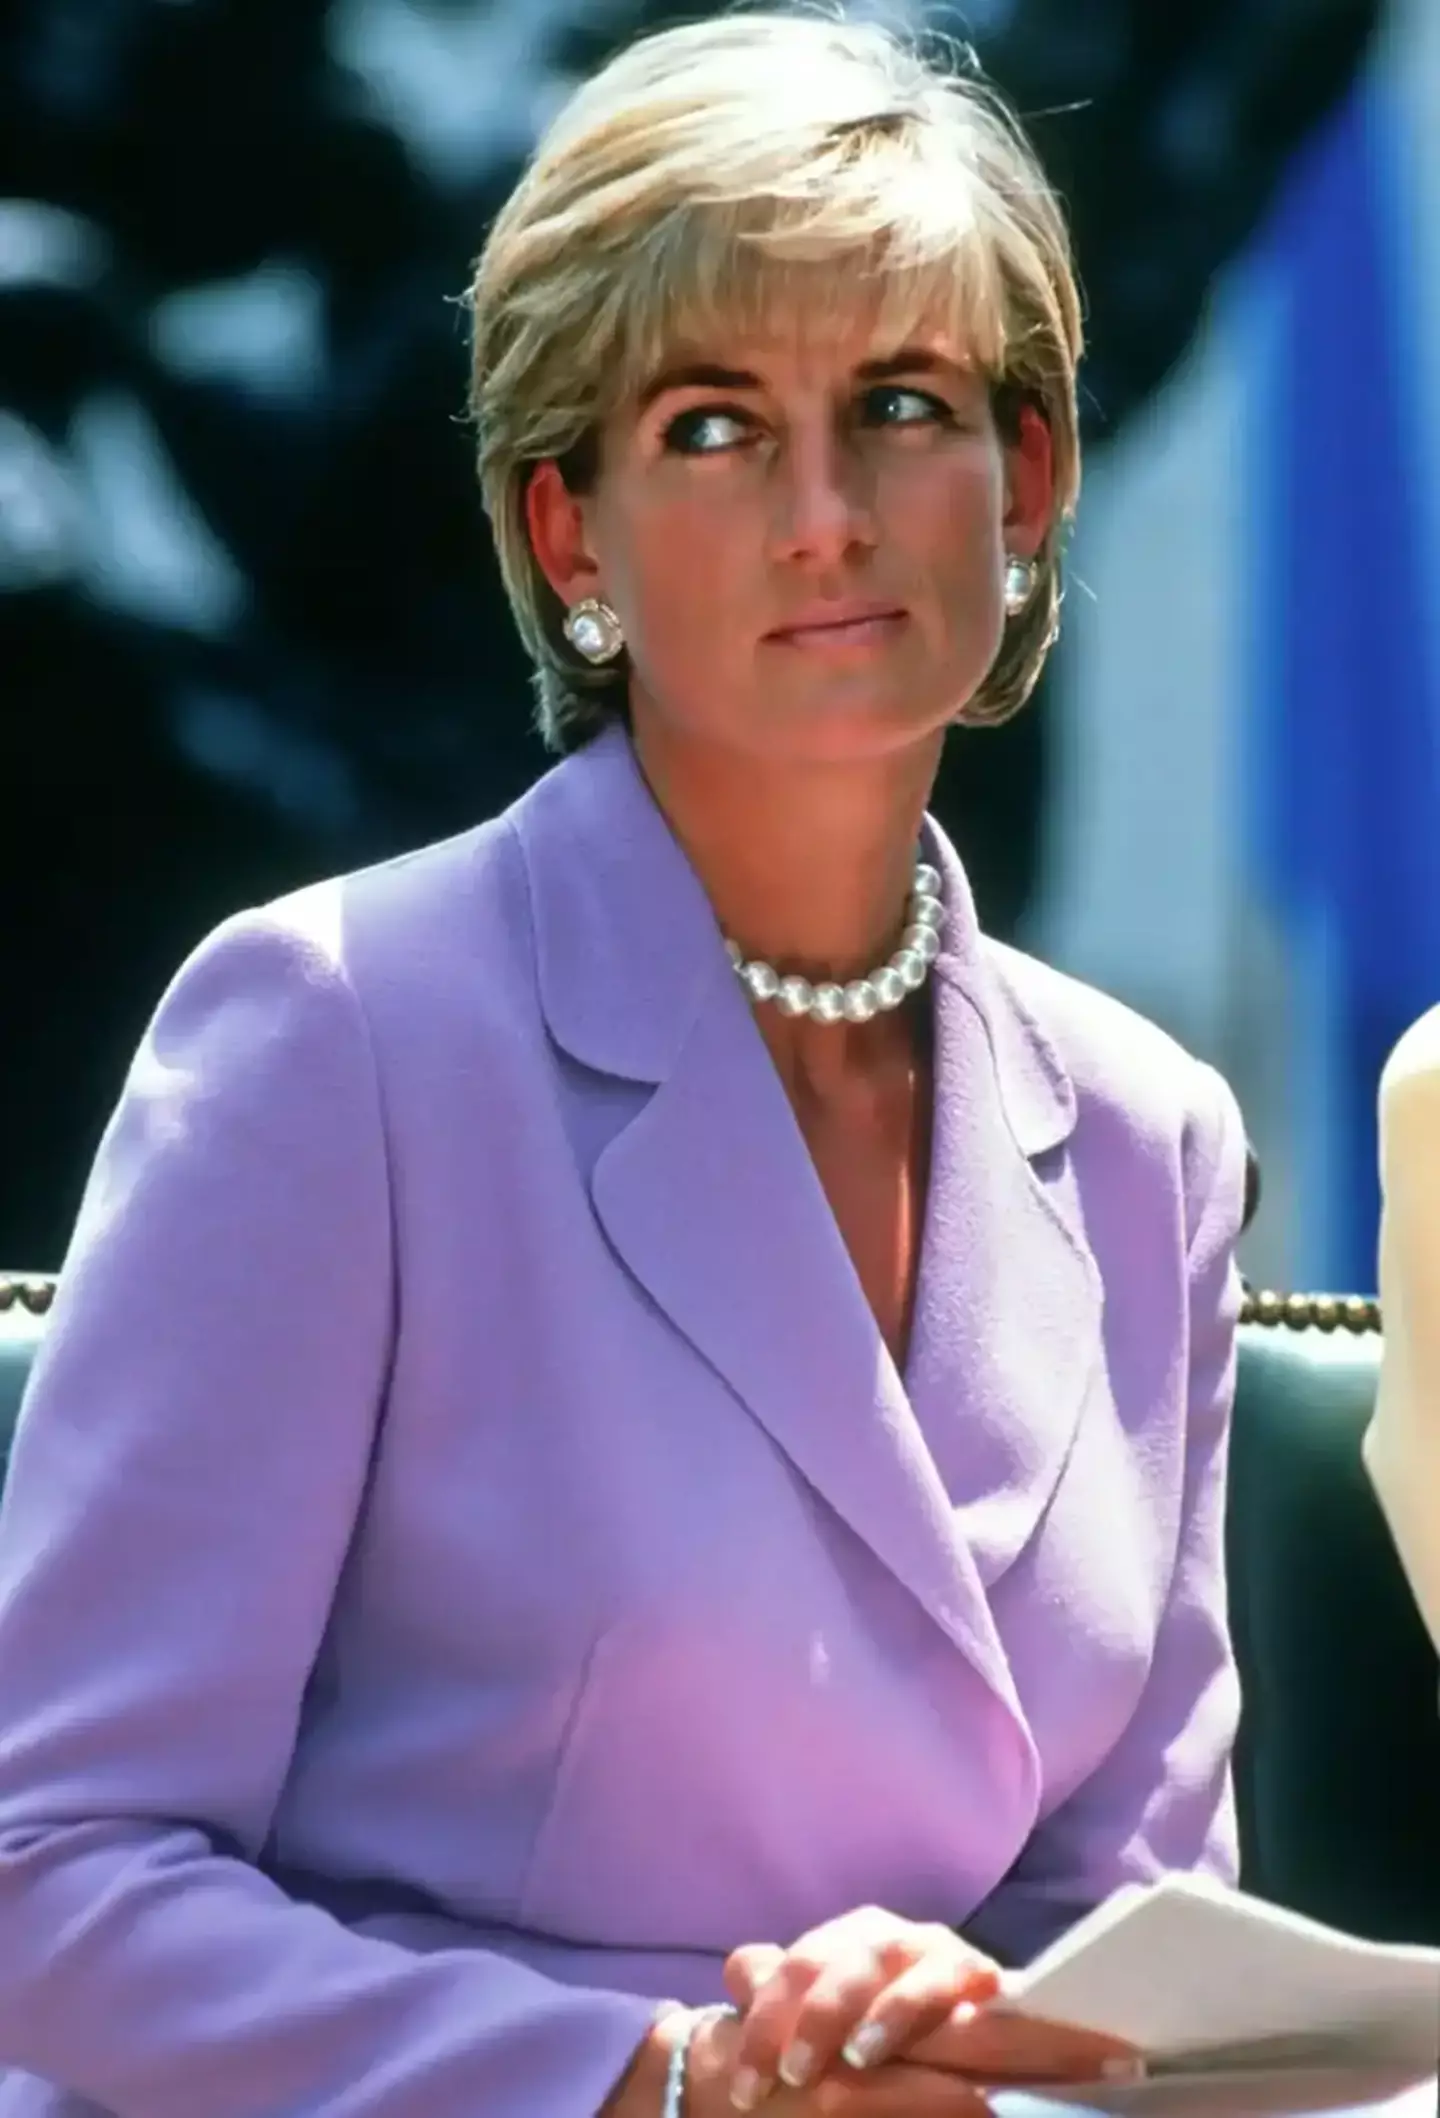 Conspiracy theorists still believe Princess Diana was intentionally killed.